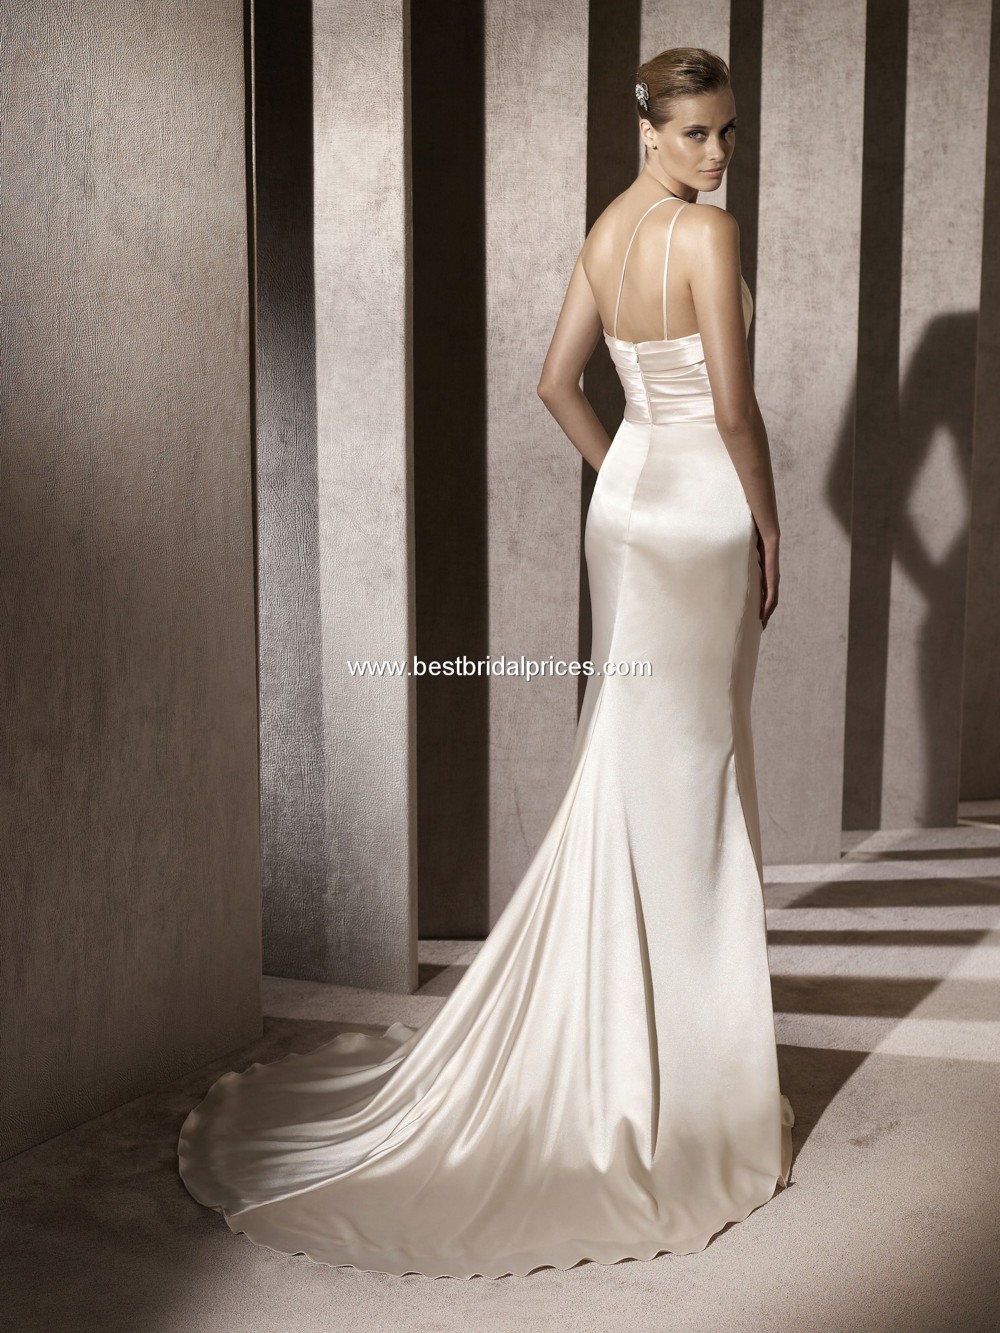 Pronovias Fiona Sample Wedding Dress Save 50% - Stillwhite